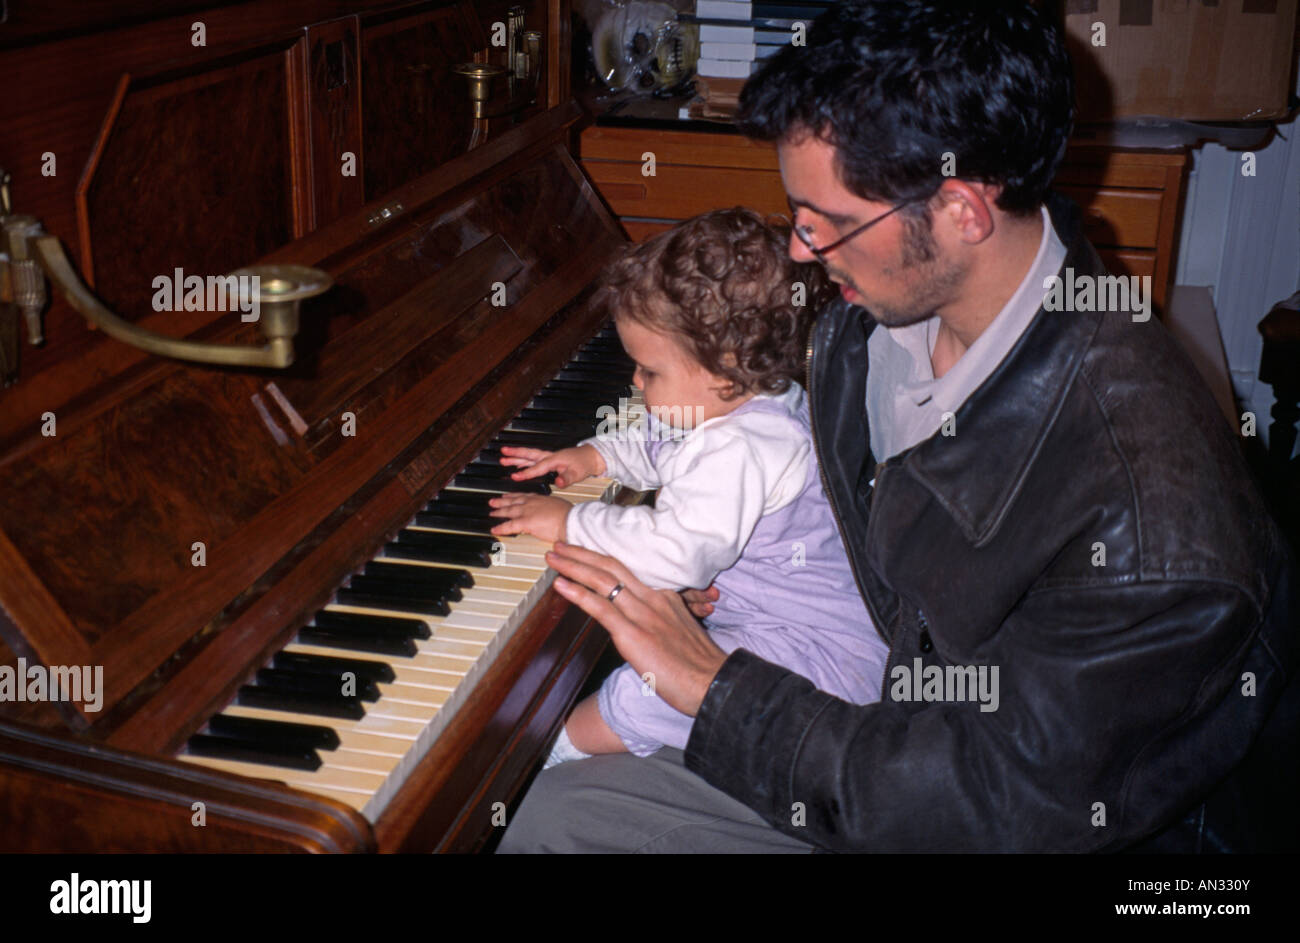 Man Looking After Baby Girl Playing At Piano Stock Photo